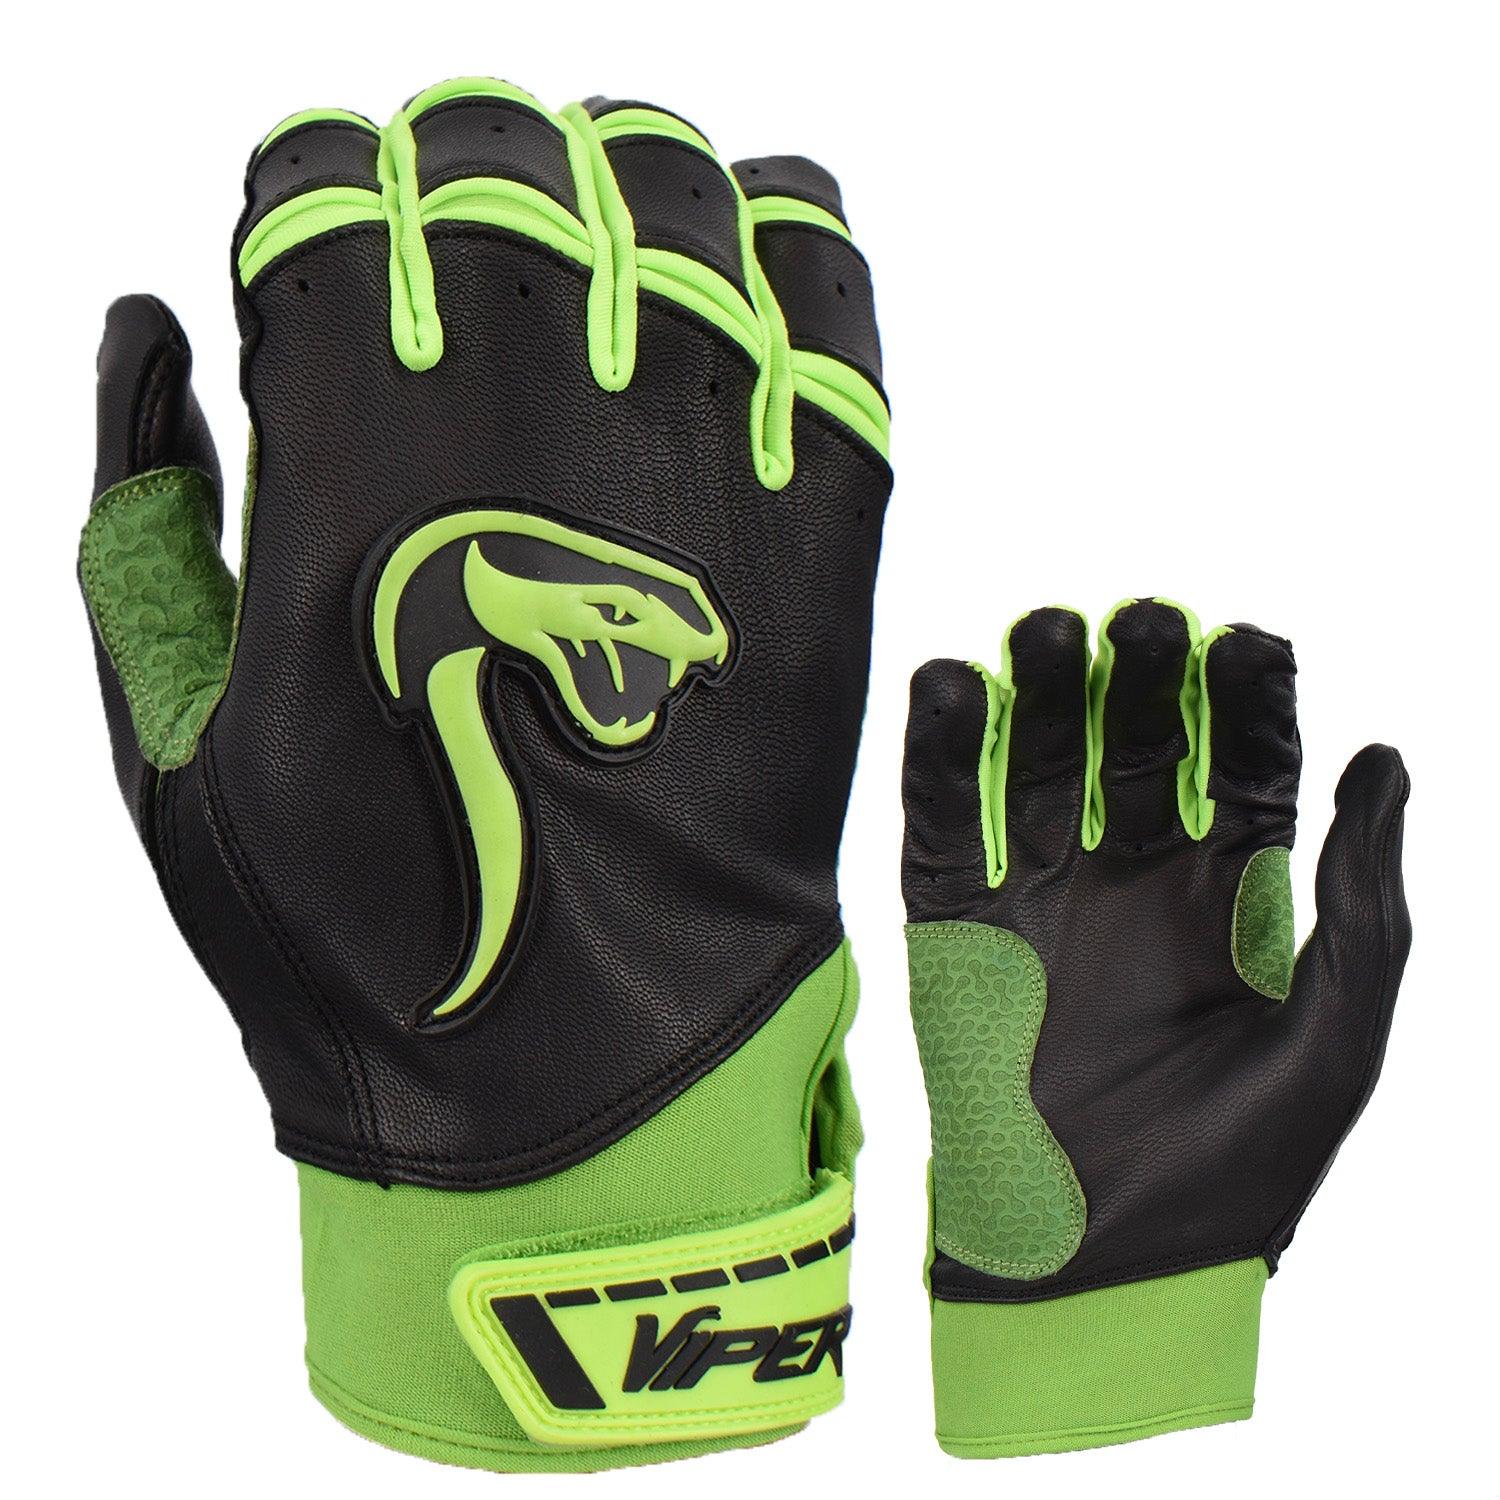 Viper Grindstone Short Cuff Batting Glove - Black/Neon Green - Smash It Sports